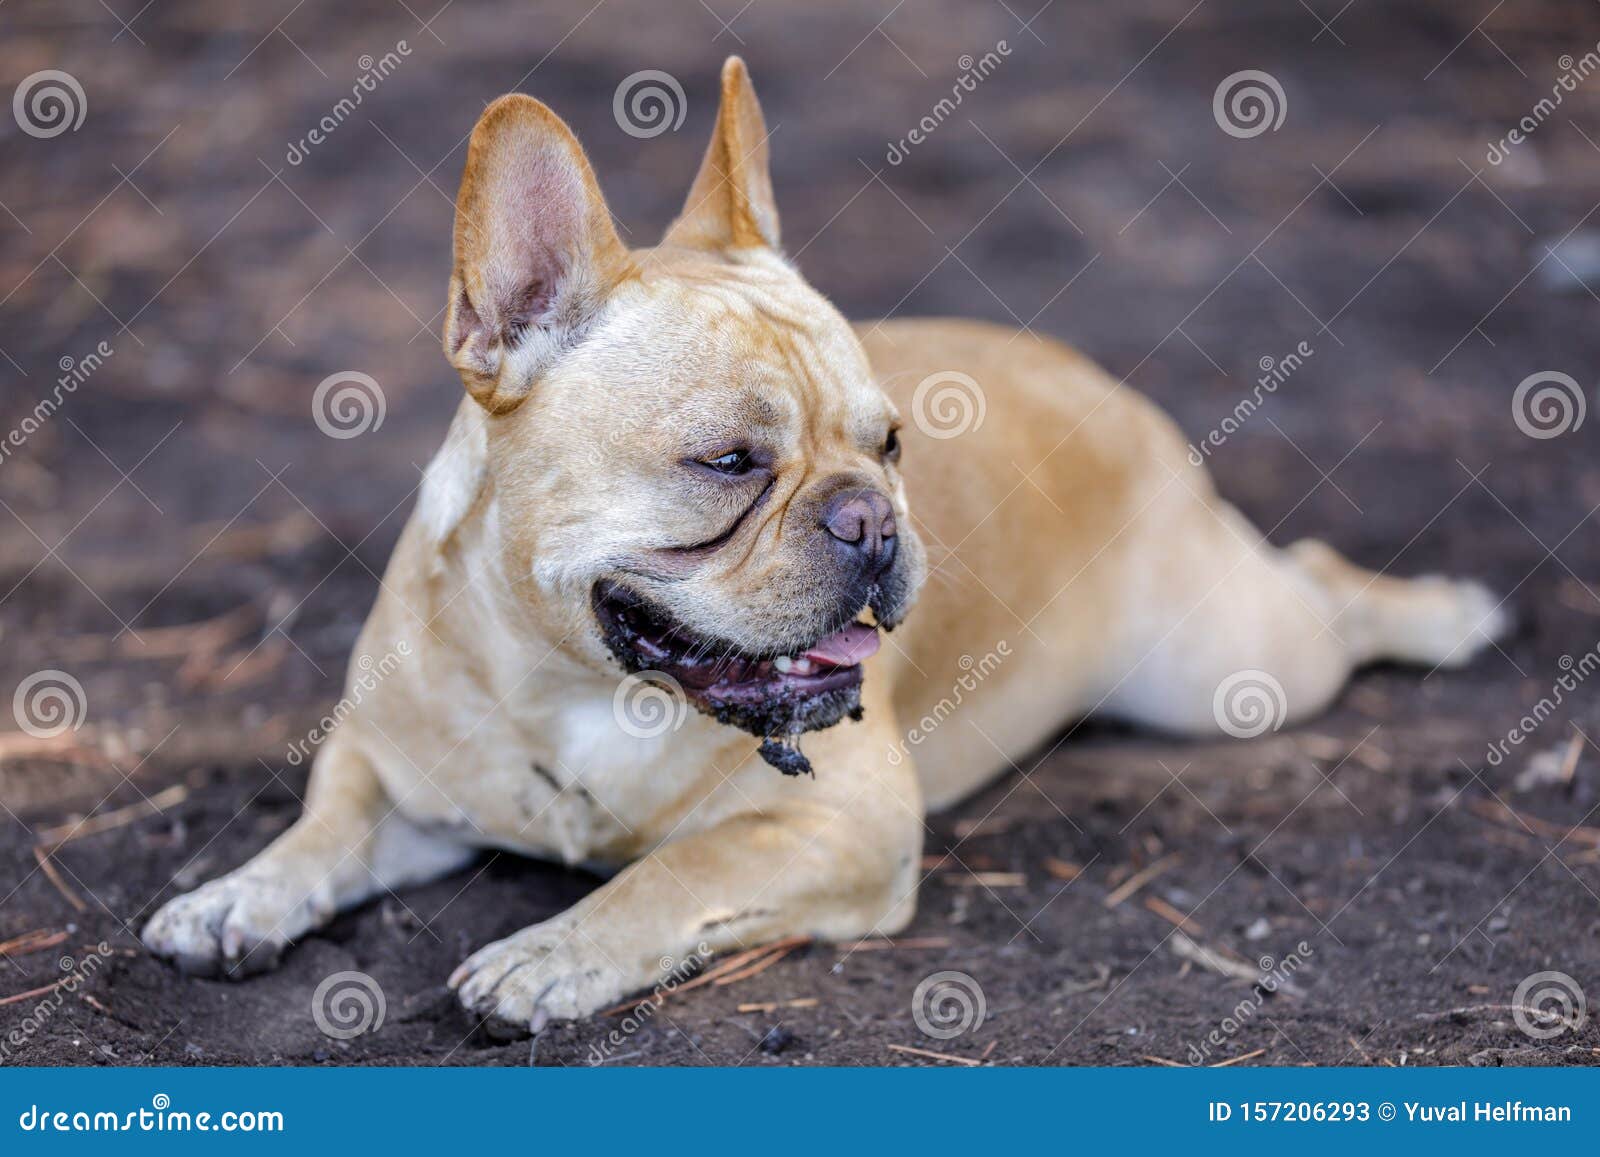 muddy french bulldog male cooling down